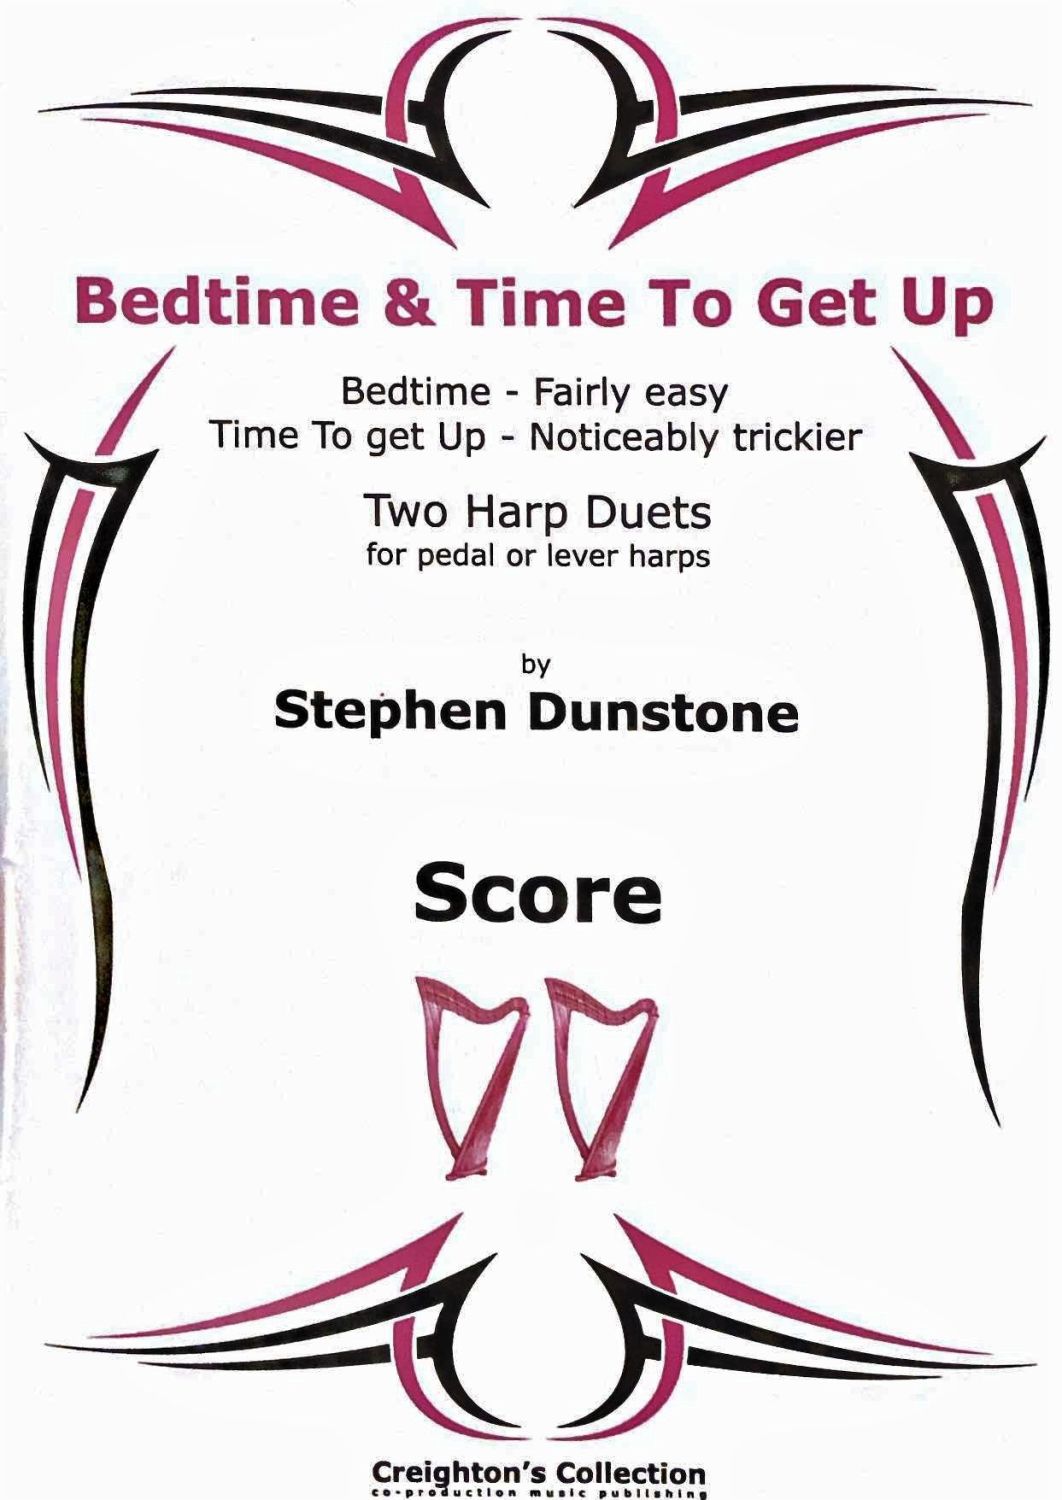 Bedtime & Time to Get Up - Stephen Dunstone